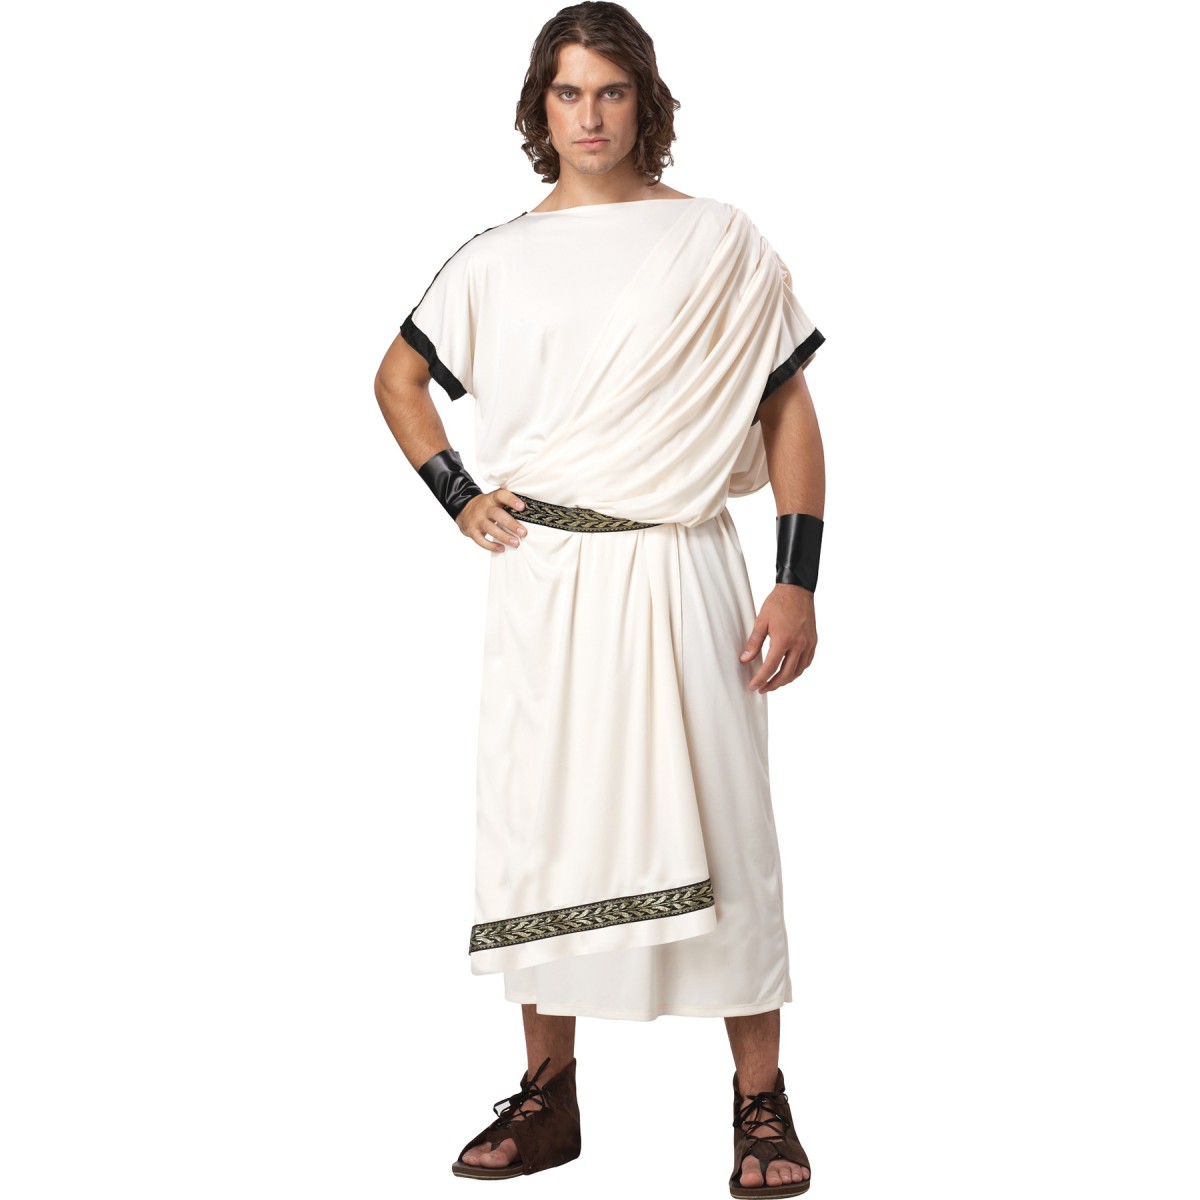 Toga Classic Deluxe Unisex Costume - Greek Roman Costume